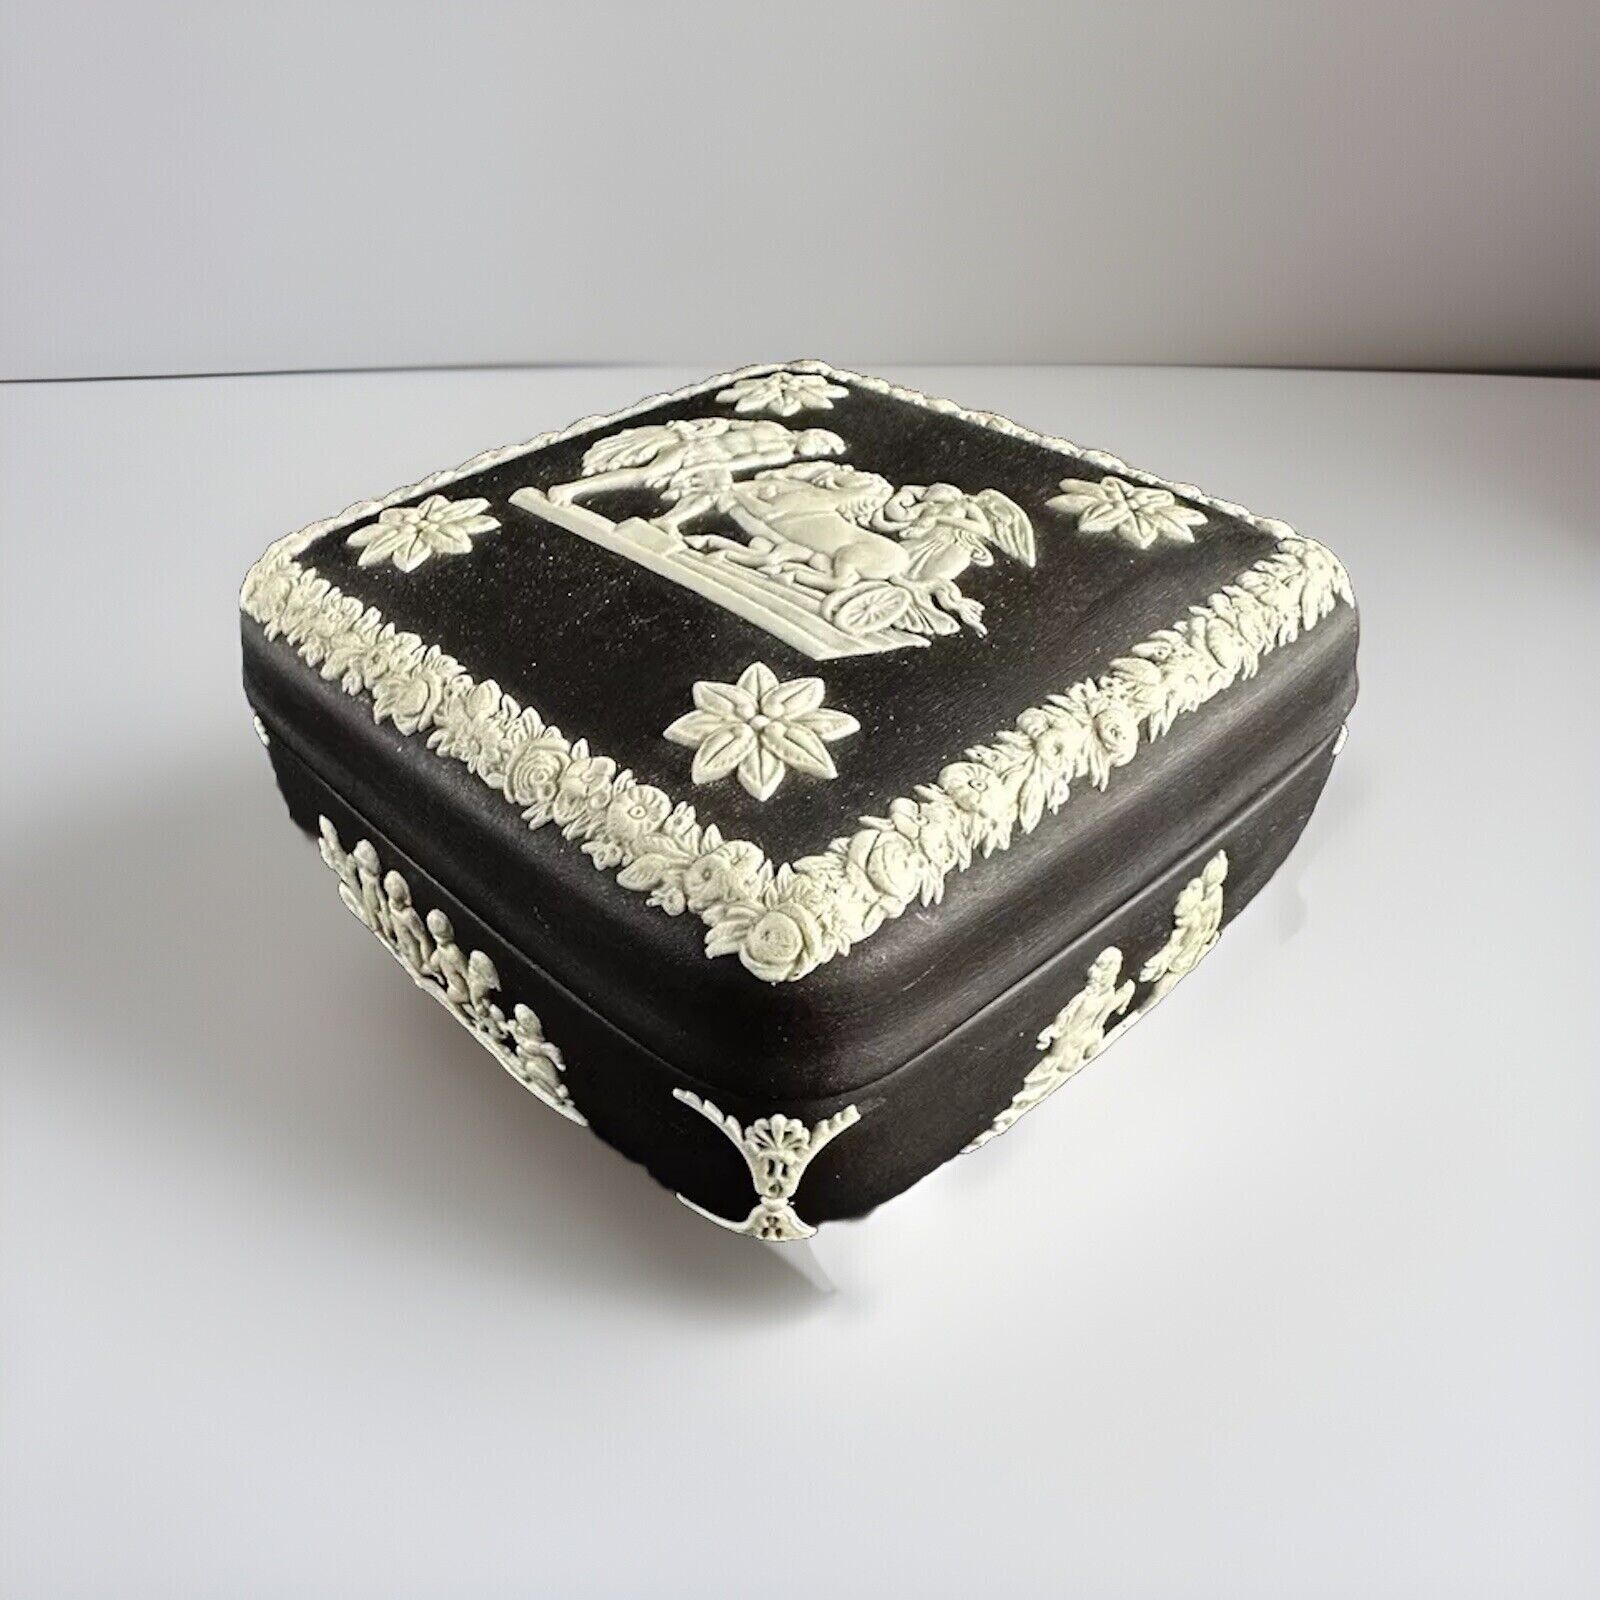 Vintage Black Wedgwood Jasperware Square Trinket Box 4” x 4” x 2”